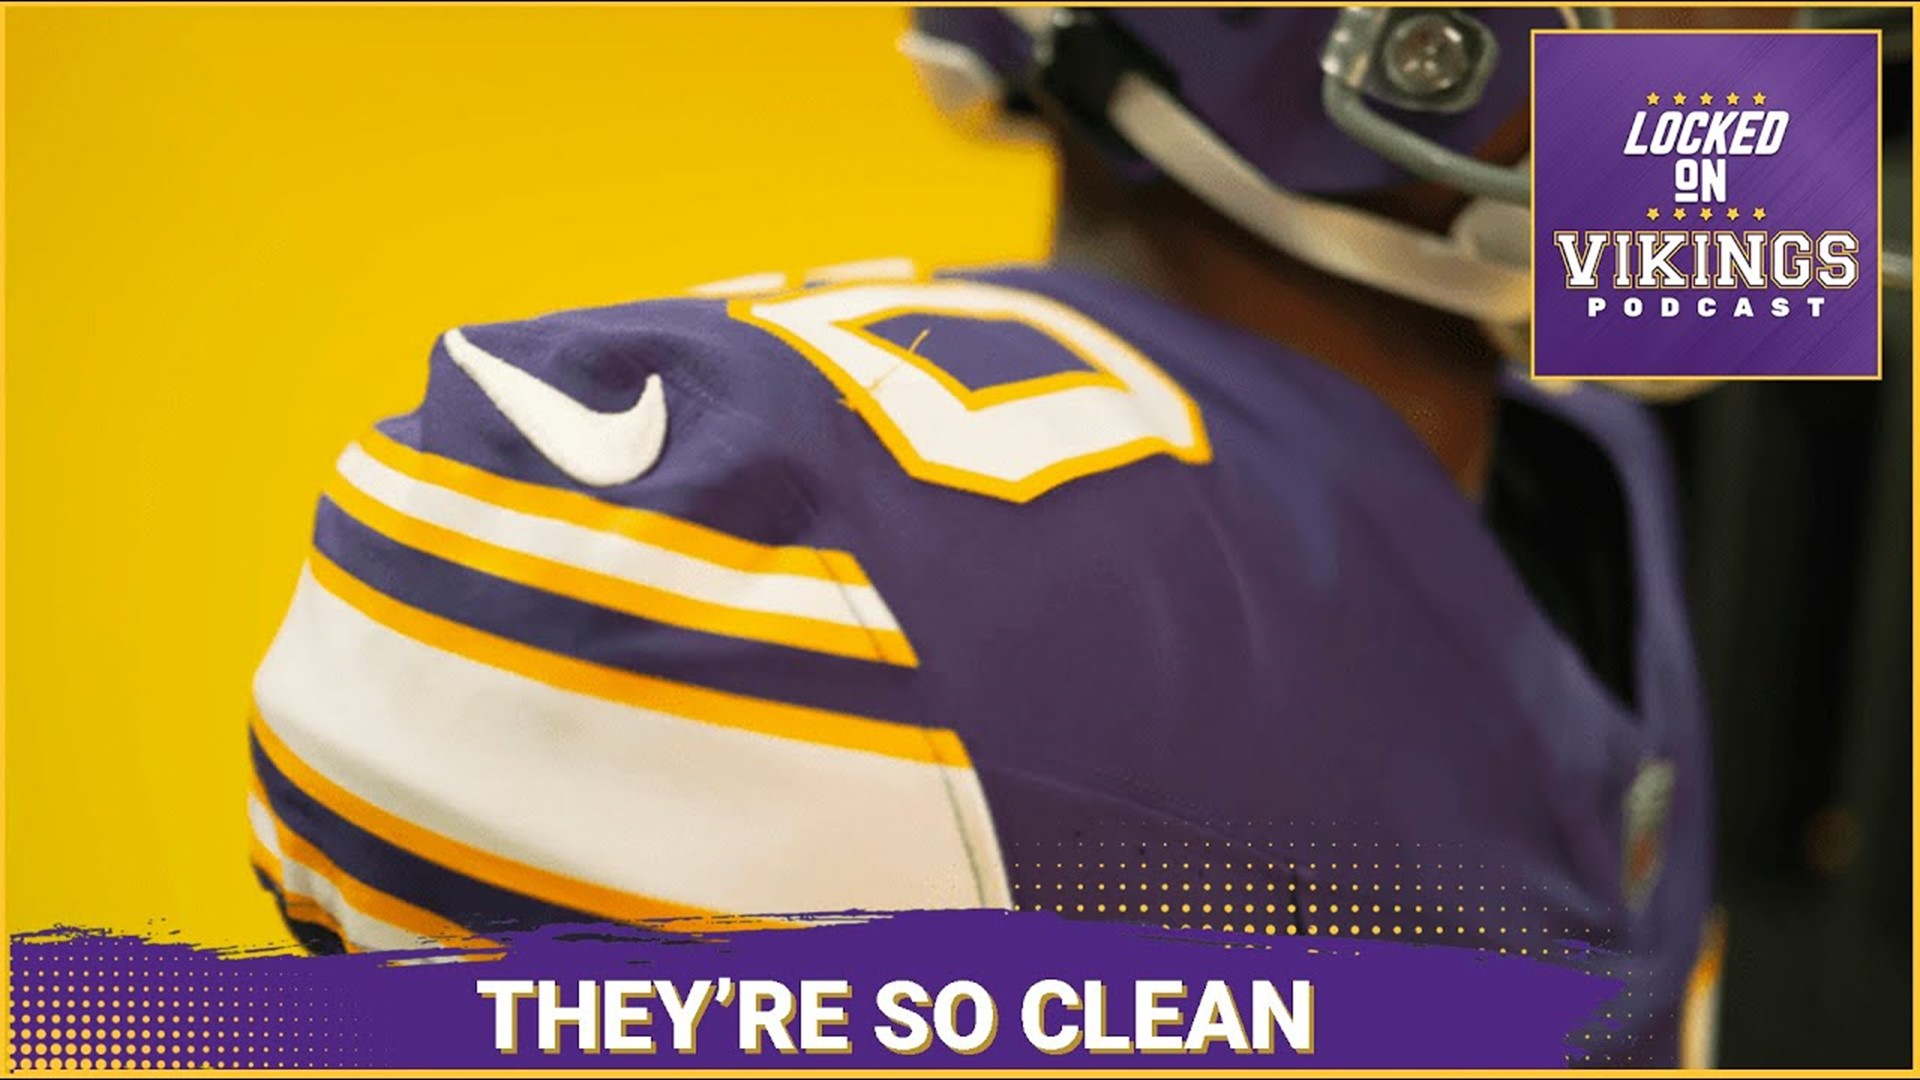 Vikings unveil long-awaited throwback jerseys - CBS Minnesota